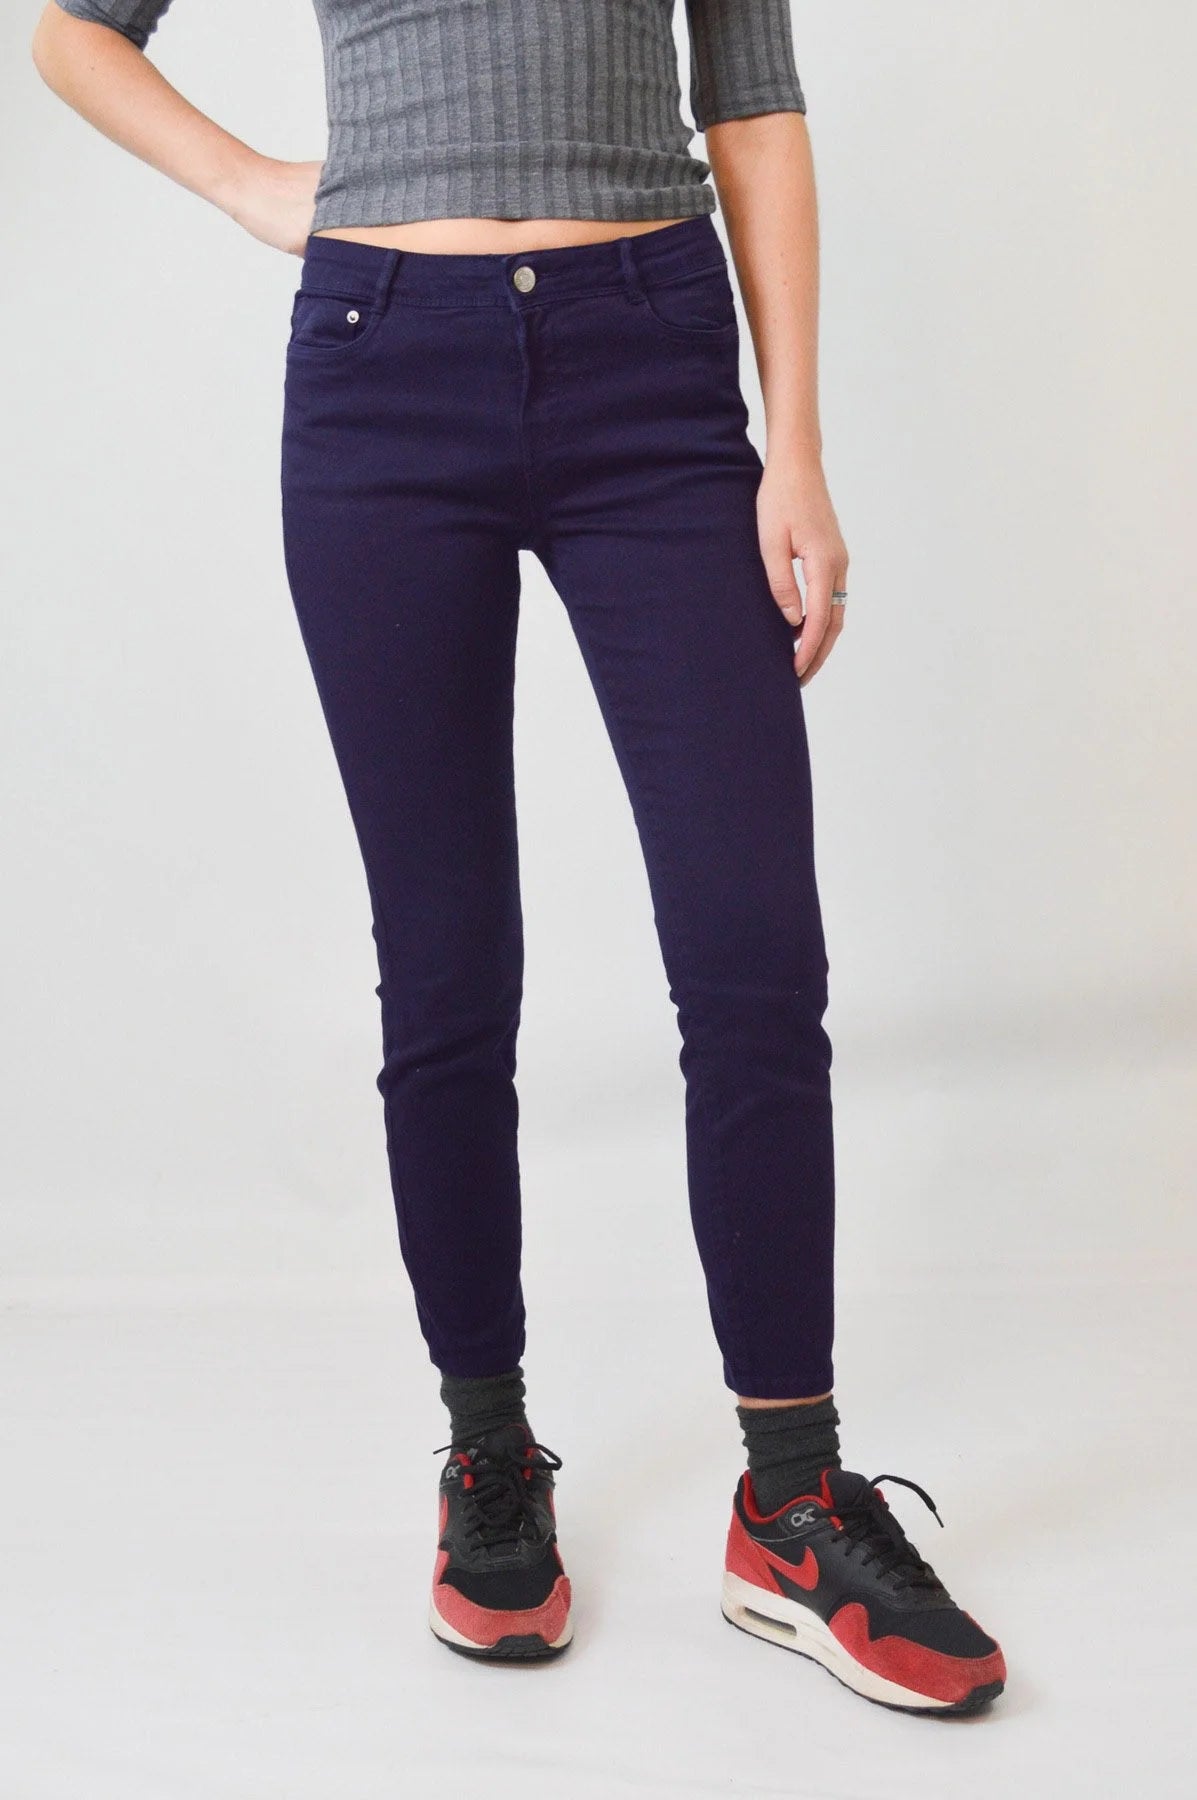 Zara Skinny Ankle Grazer Jeans Navy / 4